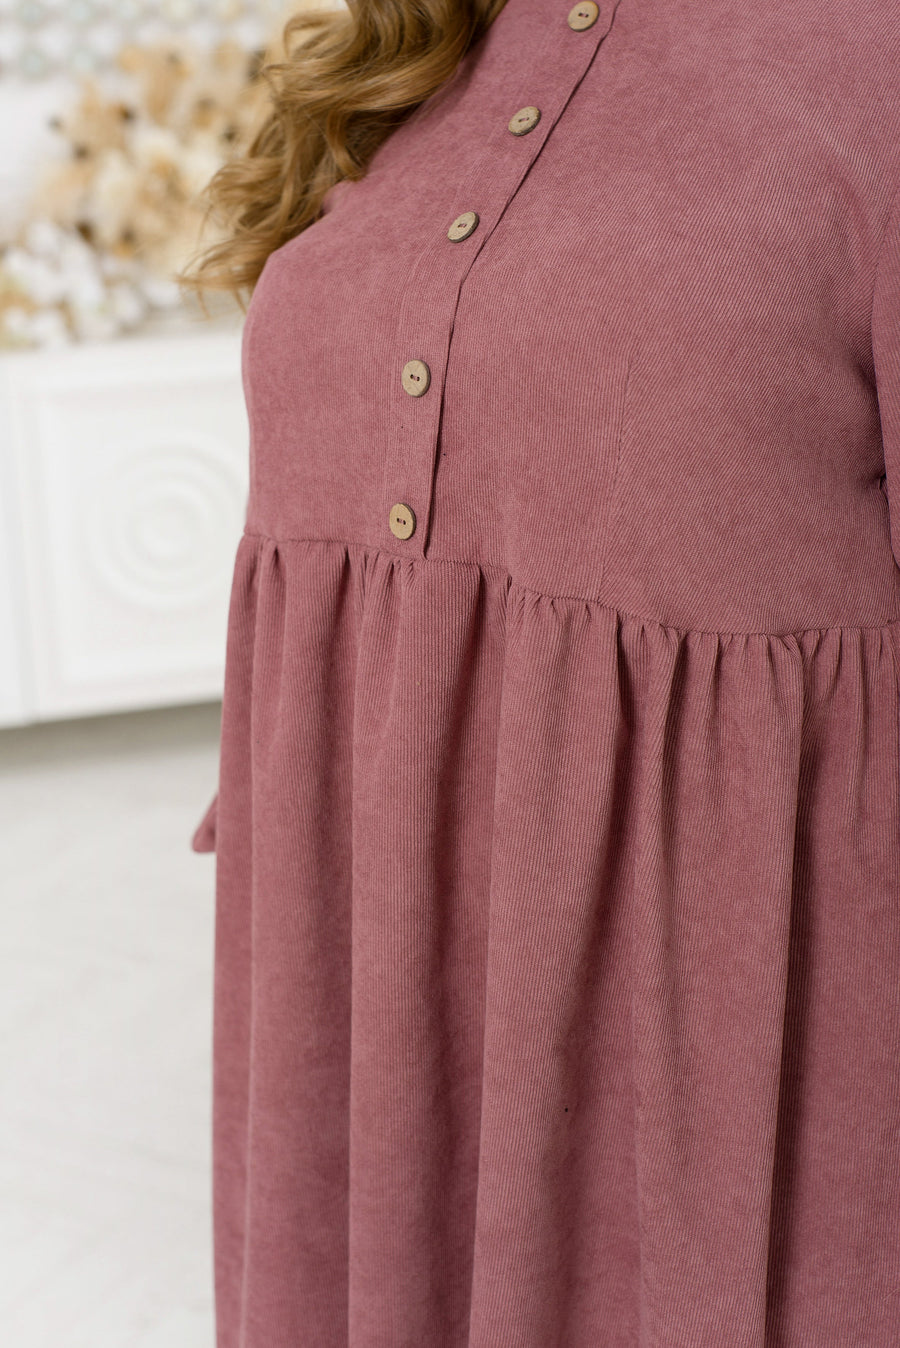 Velvet dress with buttons